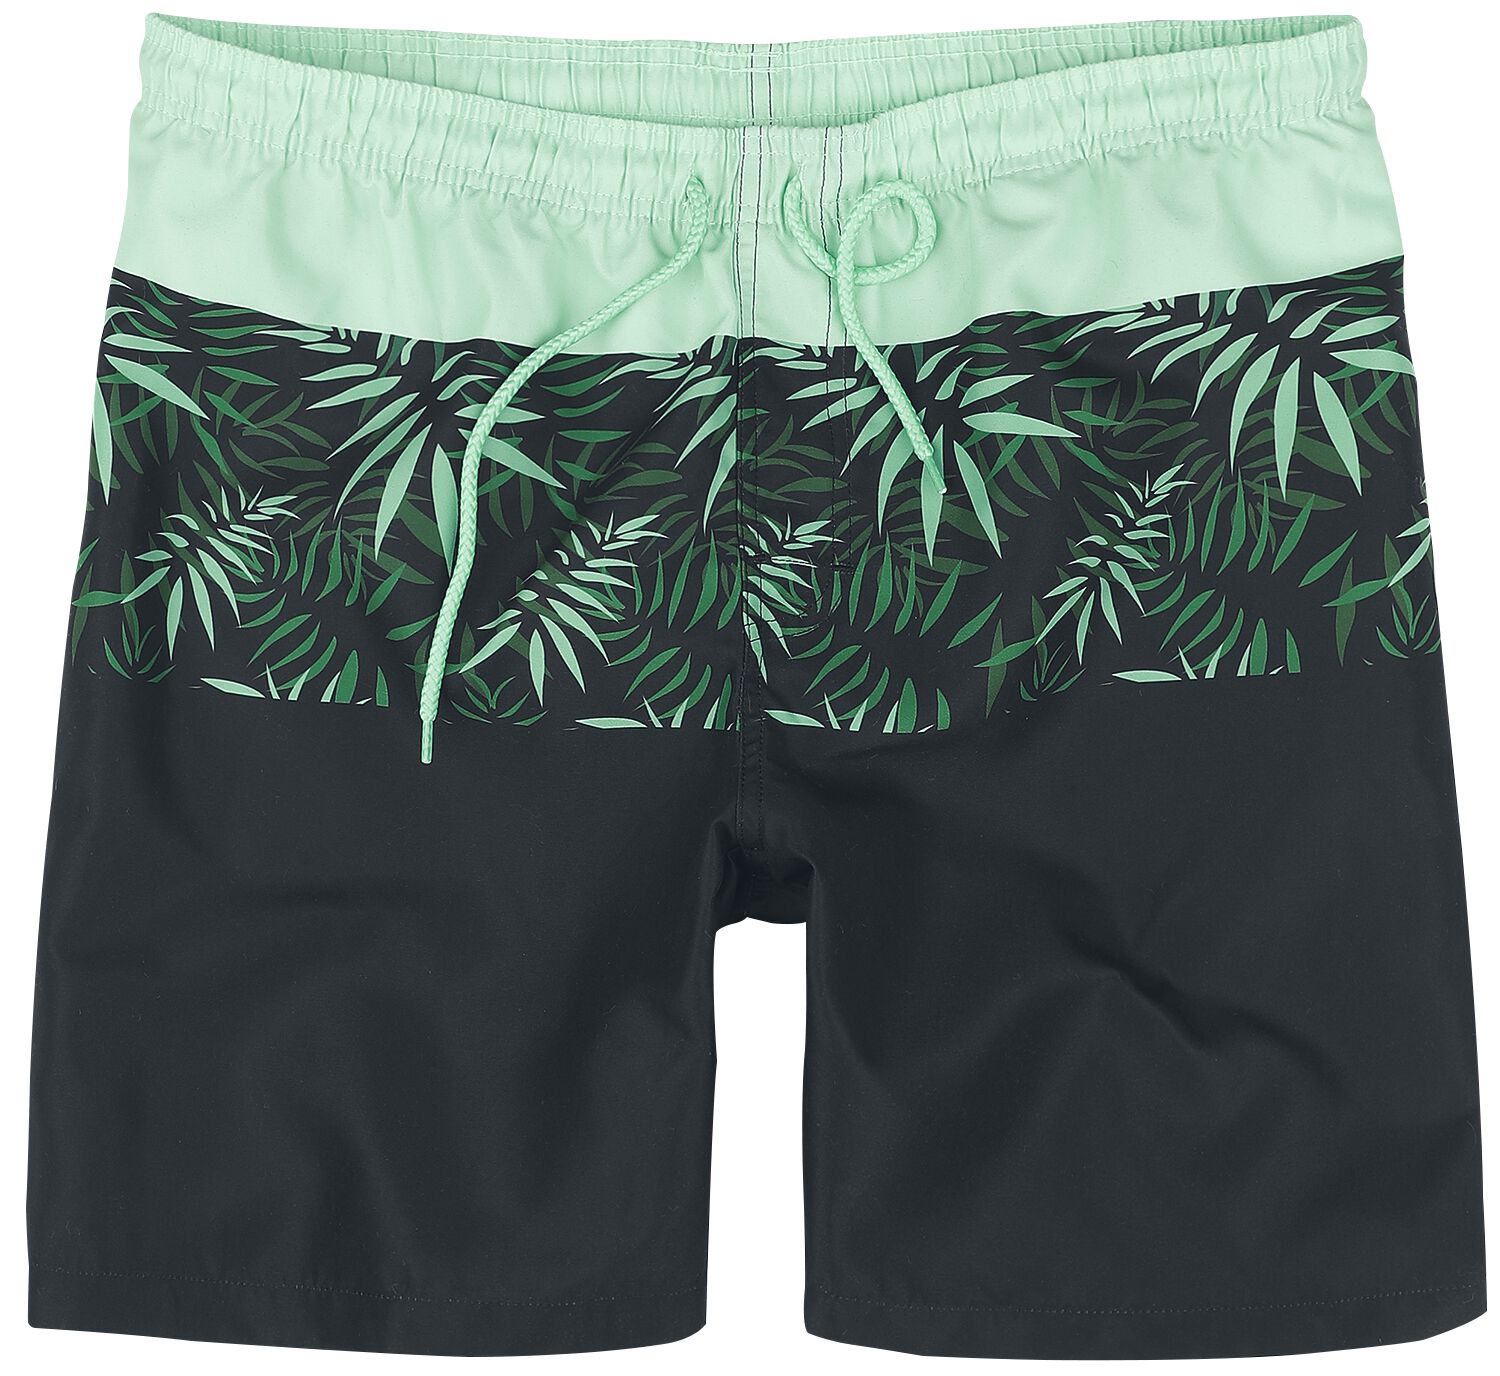 RED by EMP Swim Shorts With Palm Trees Badeshort schwarz grün in S